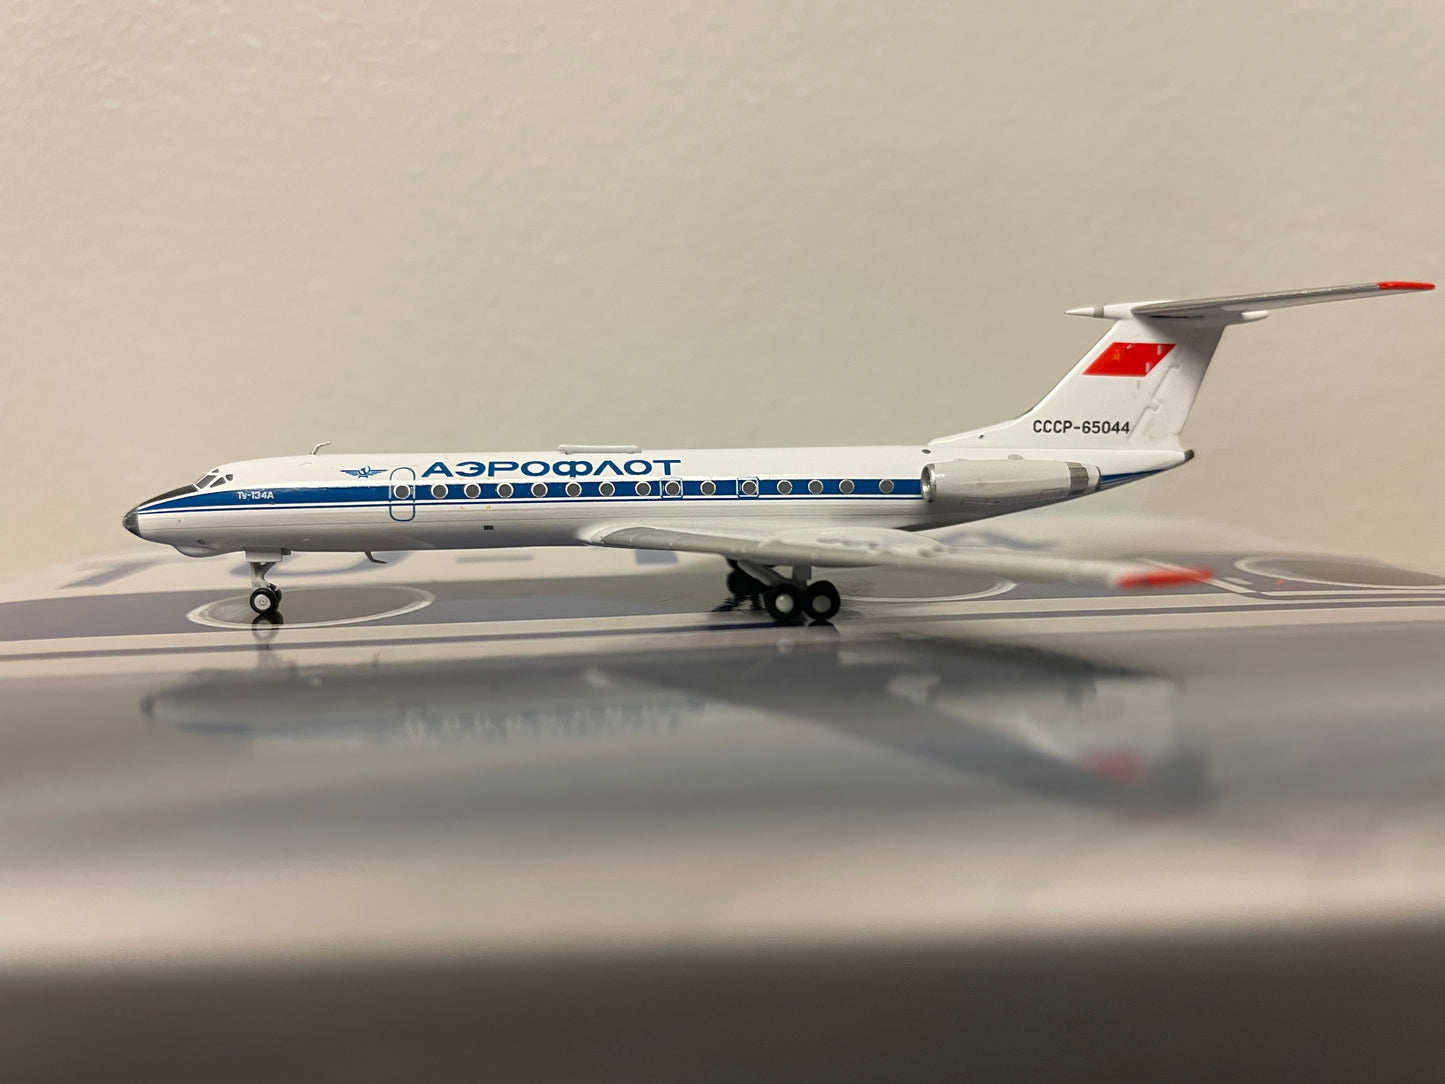 1:400 Panda Models Aeroflot Tupolev Tu-134 CCCP-65044 202108